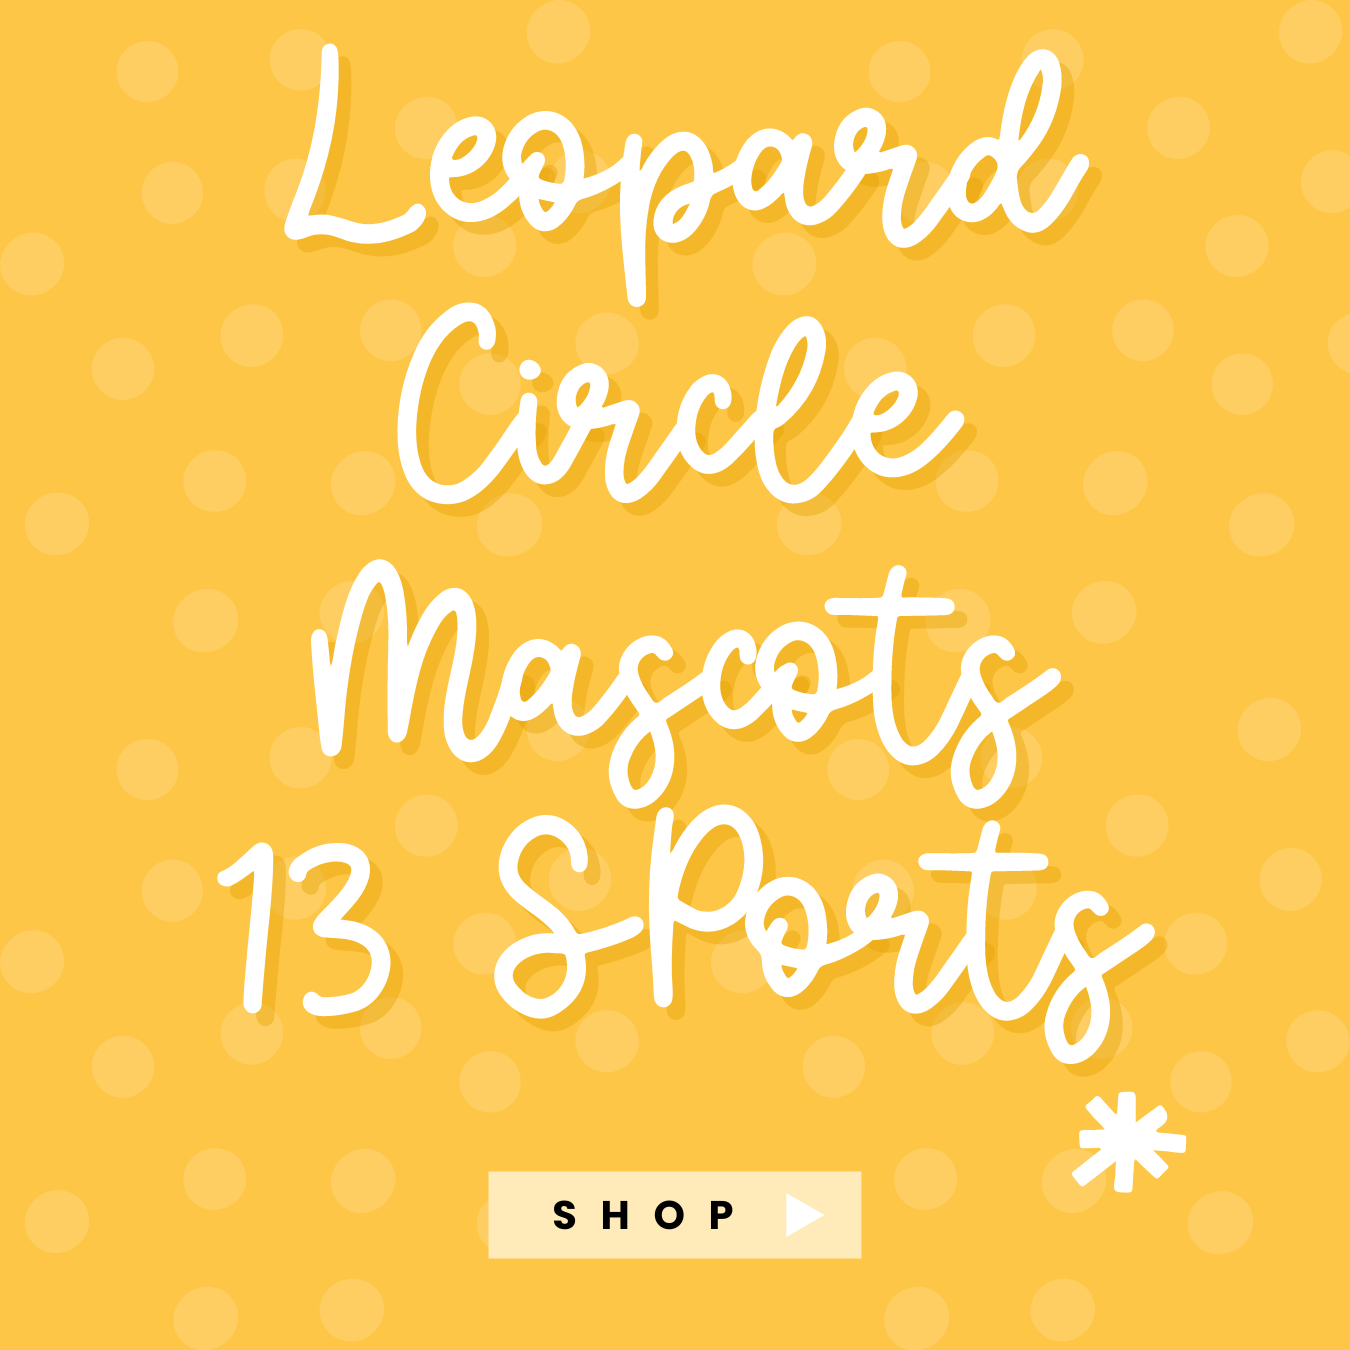 Leopard Circle Mascots 13 Sports